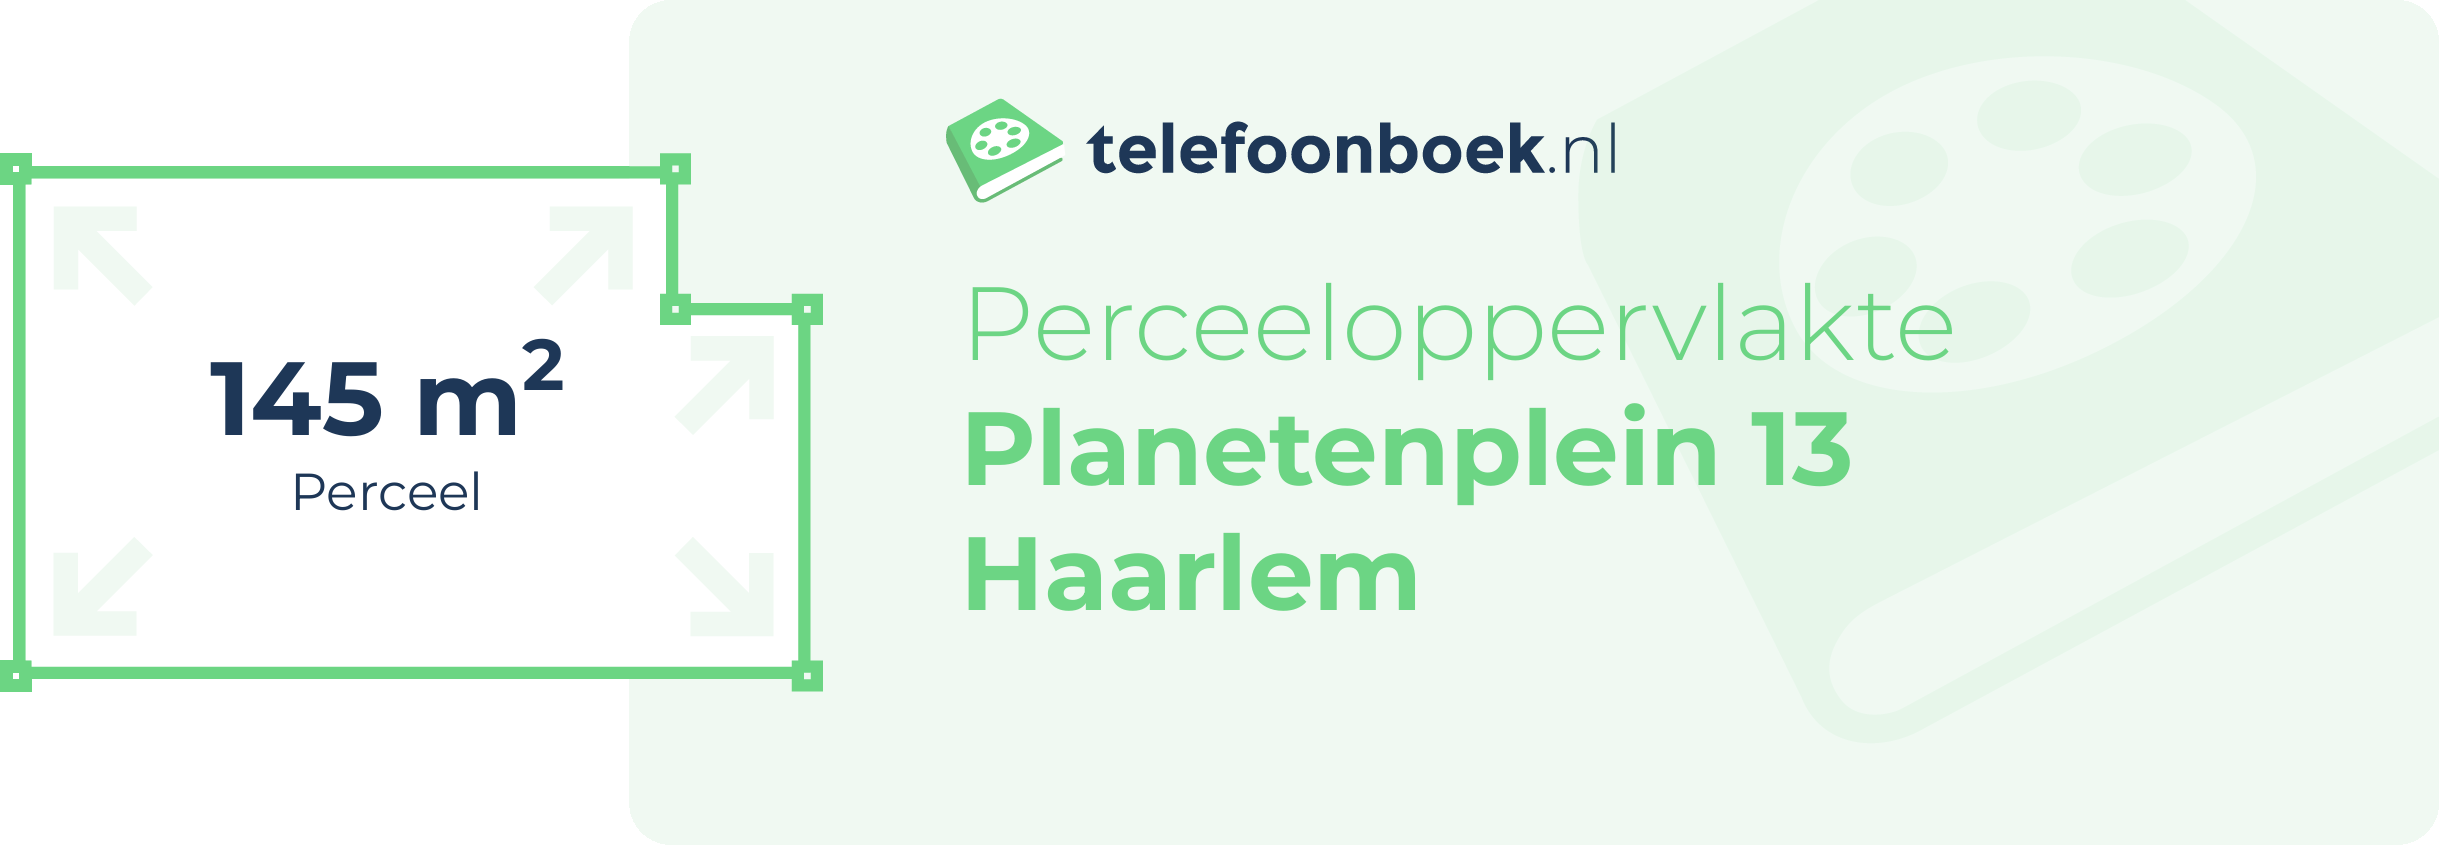 Perceeloppervlakte Planetenplein 13 Haarlem